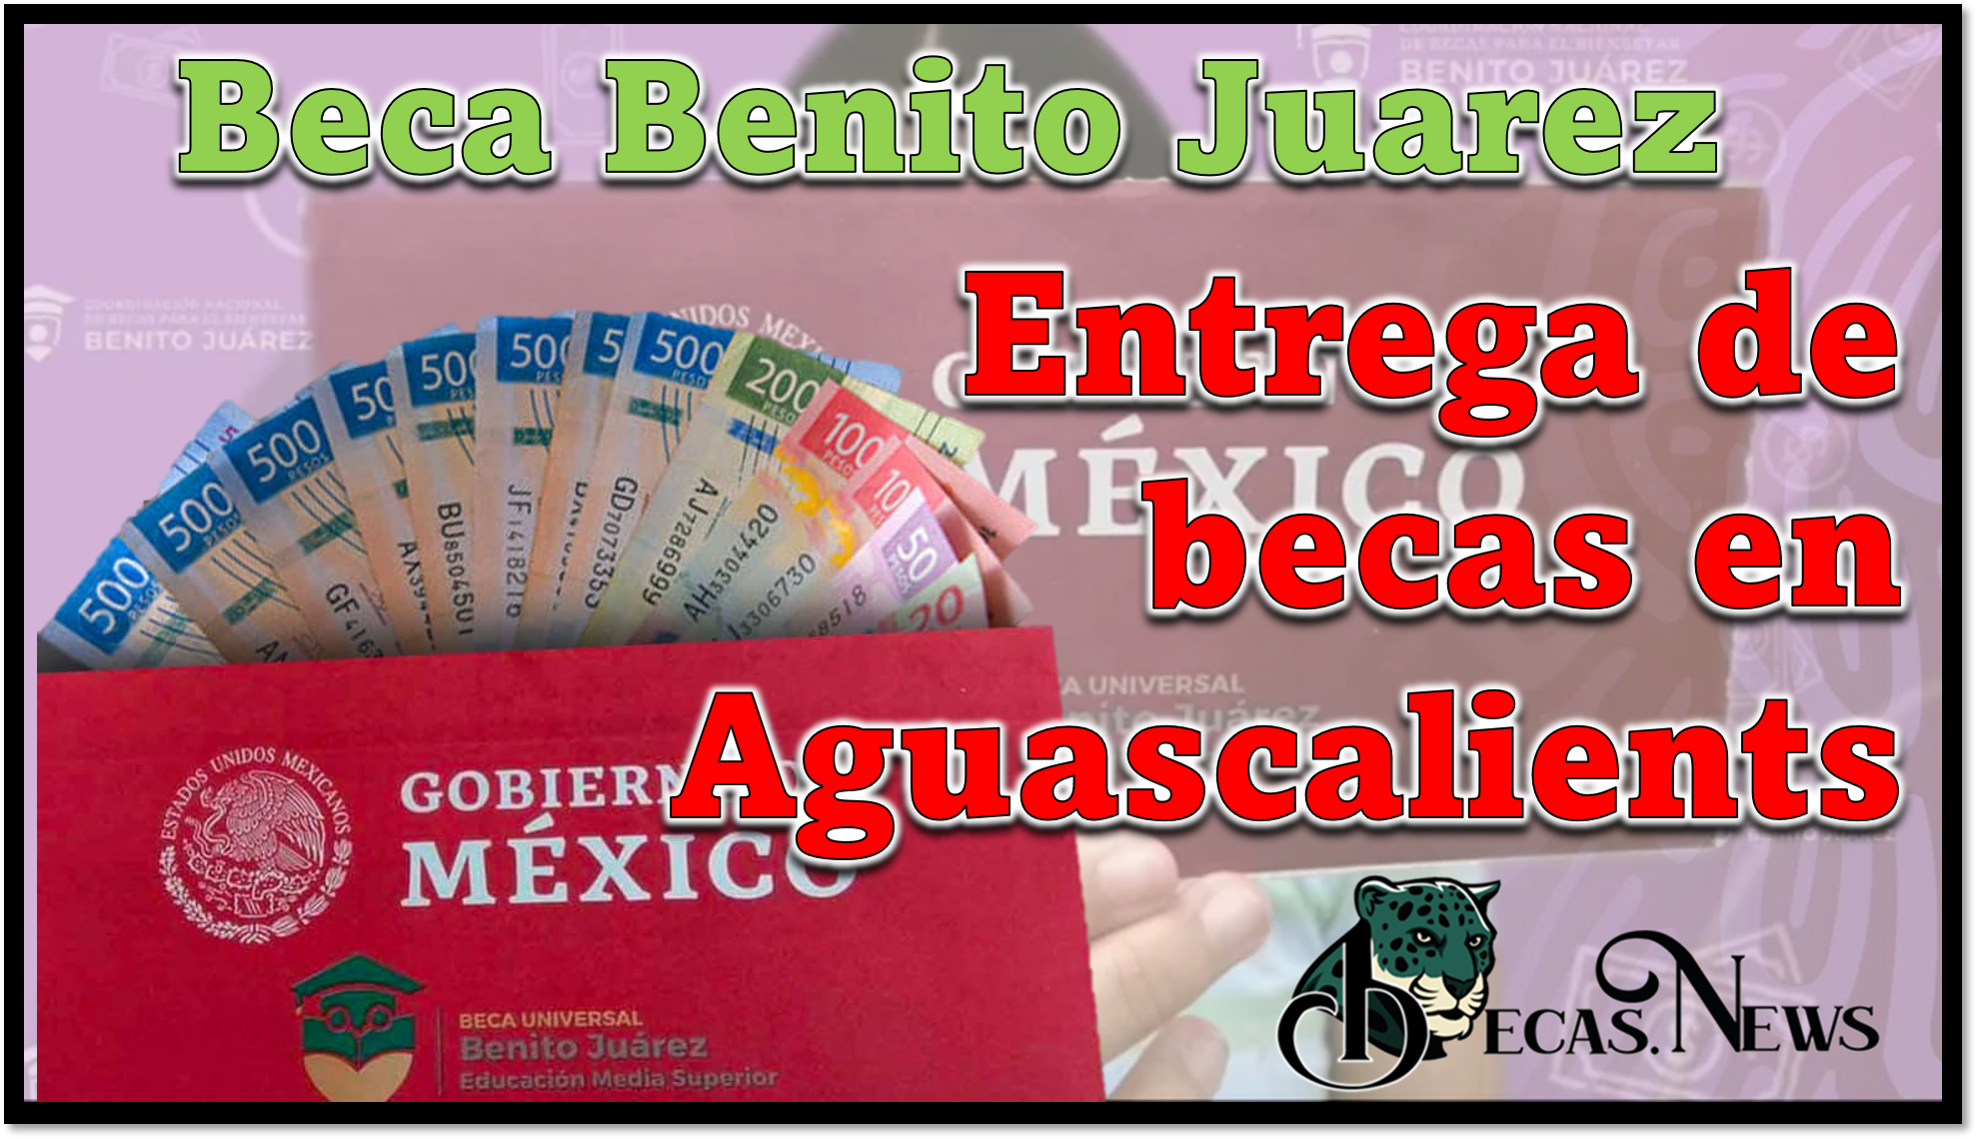 Becas Benito Juarez: Entrega de becas en Aguascalientes a estudiantes